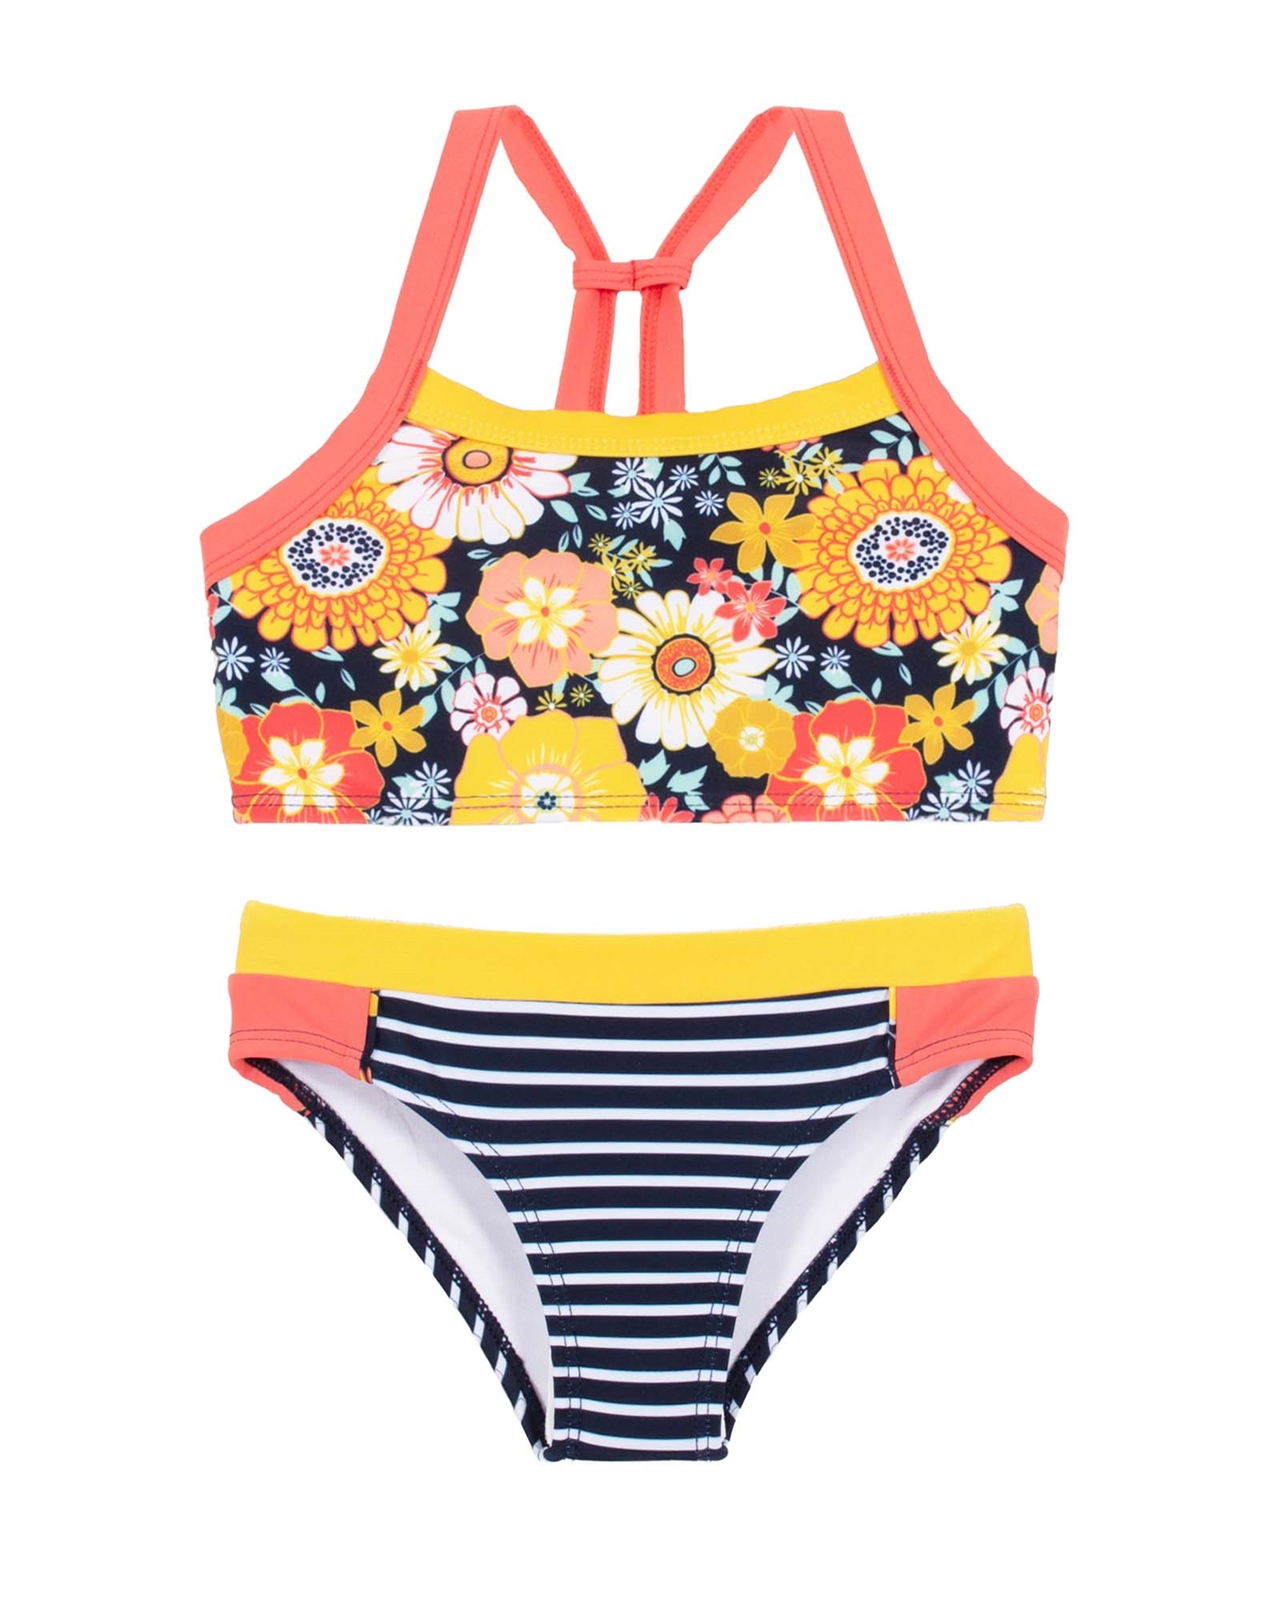 NANO Girls' Bikini in Stripe and Daisy Print, Sizes 3-14